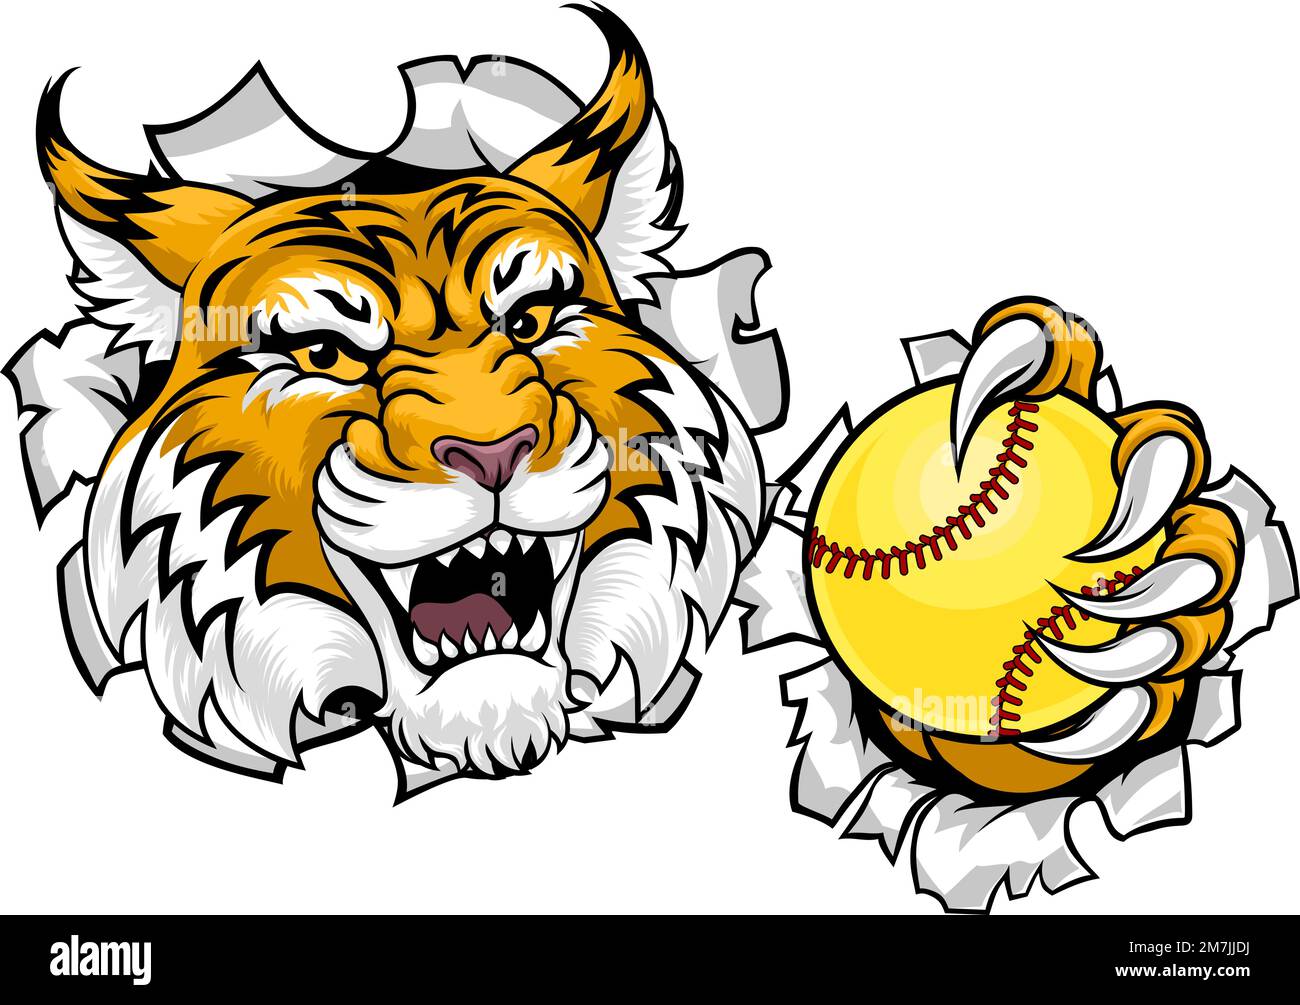 Wildcat Bobcat Softball Animal Sports Team Mascot Stock Vector